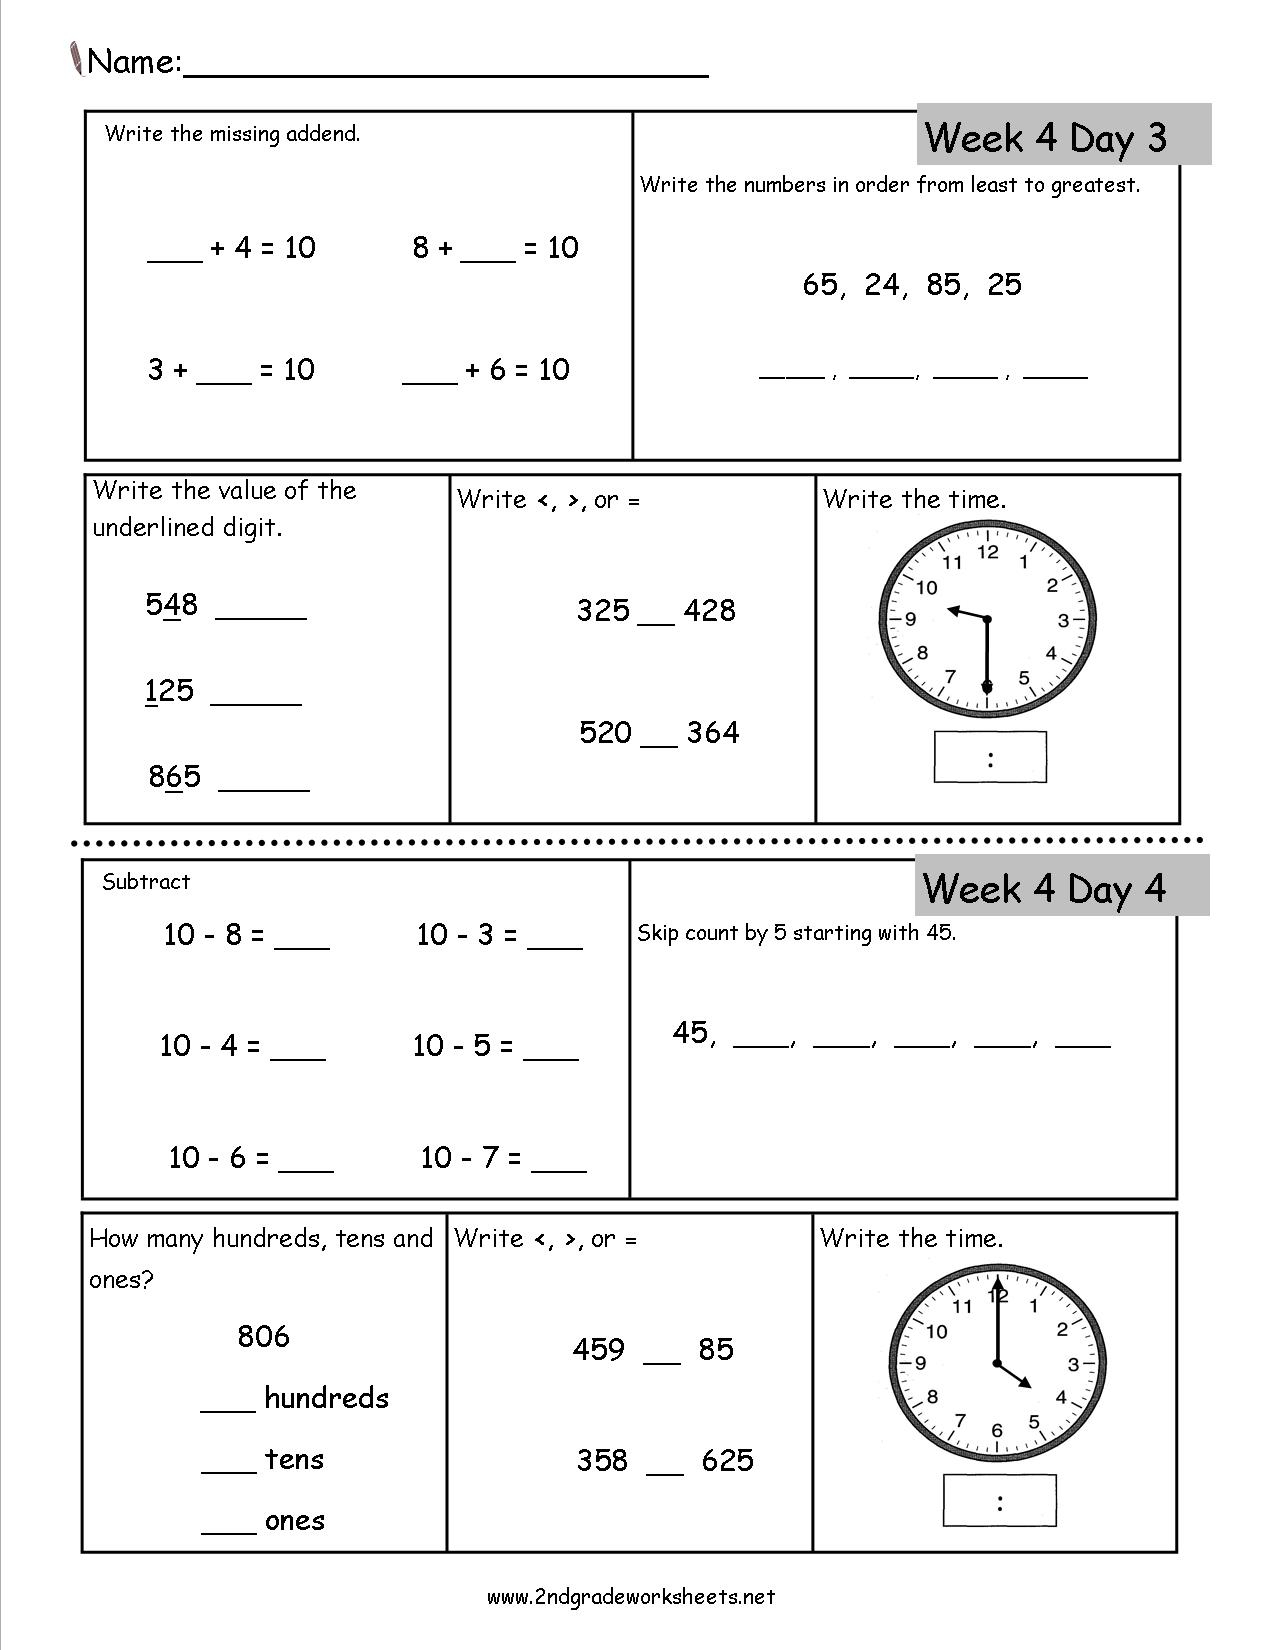 Free 2Nd Grade Daily Math Worksheets - Free Printable Activity Sheets For 2Nd Grade